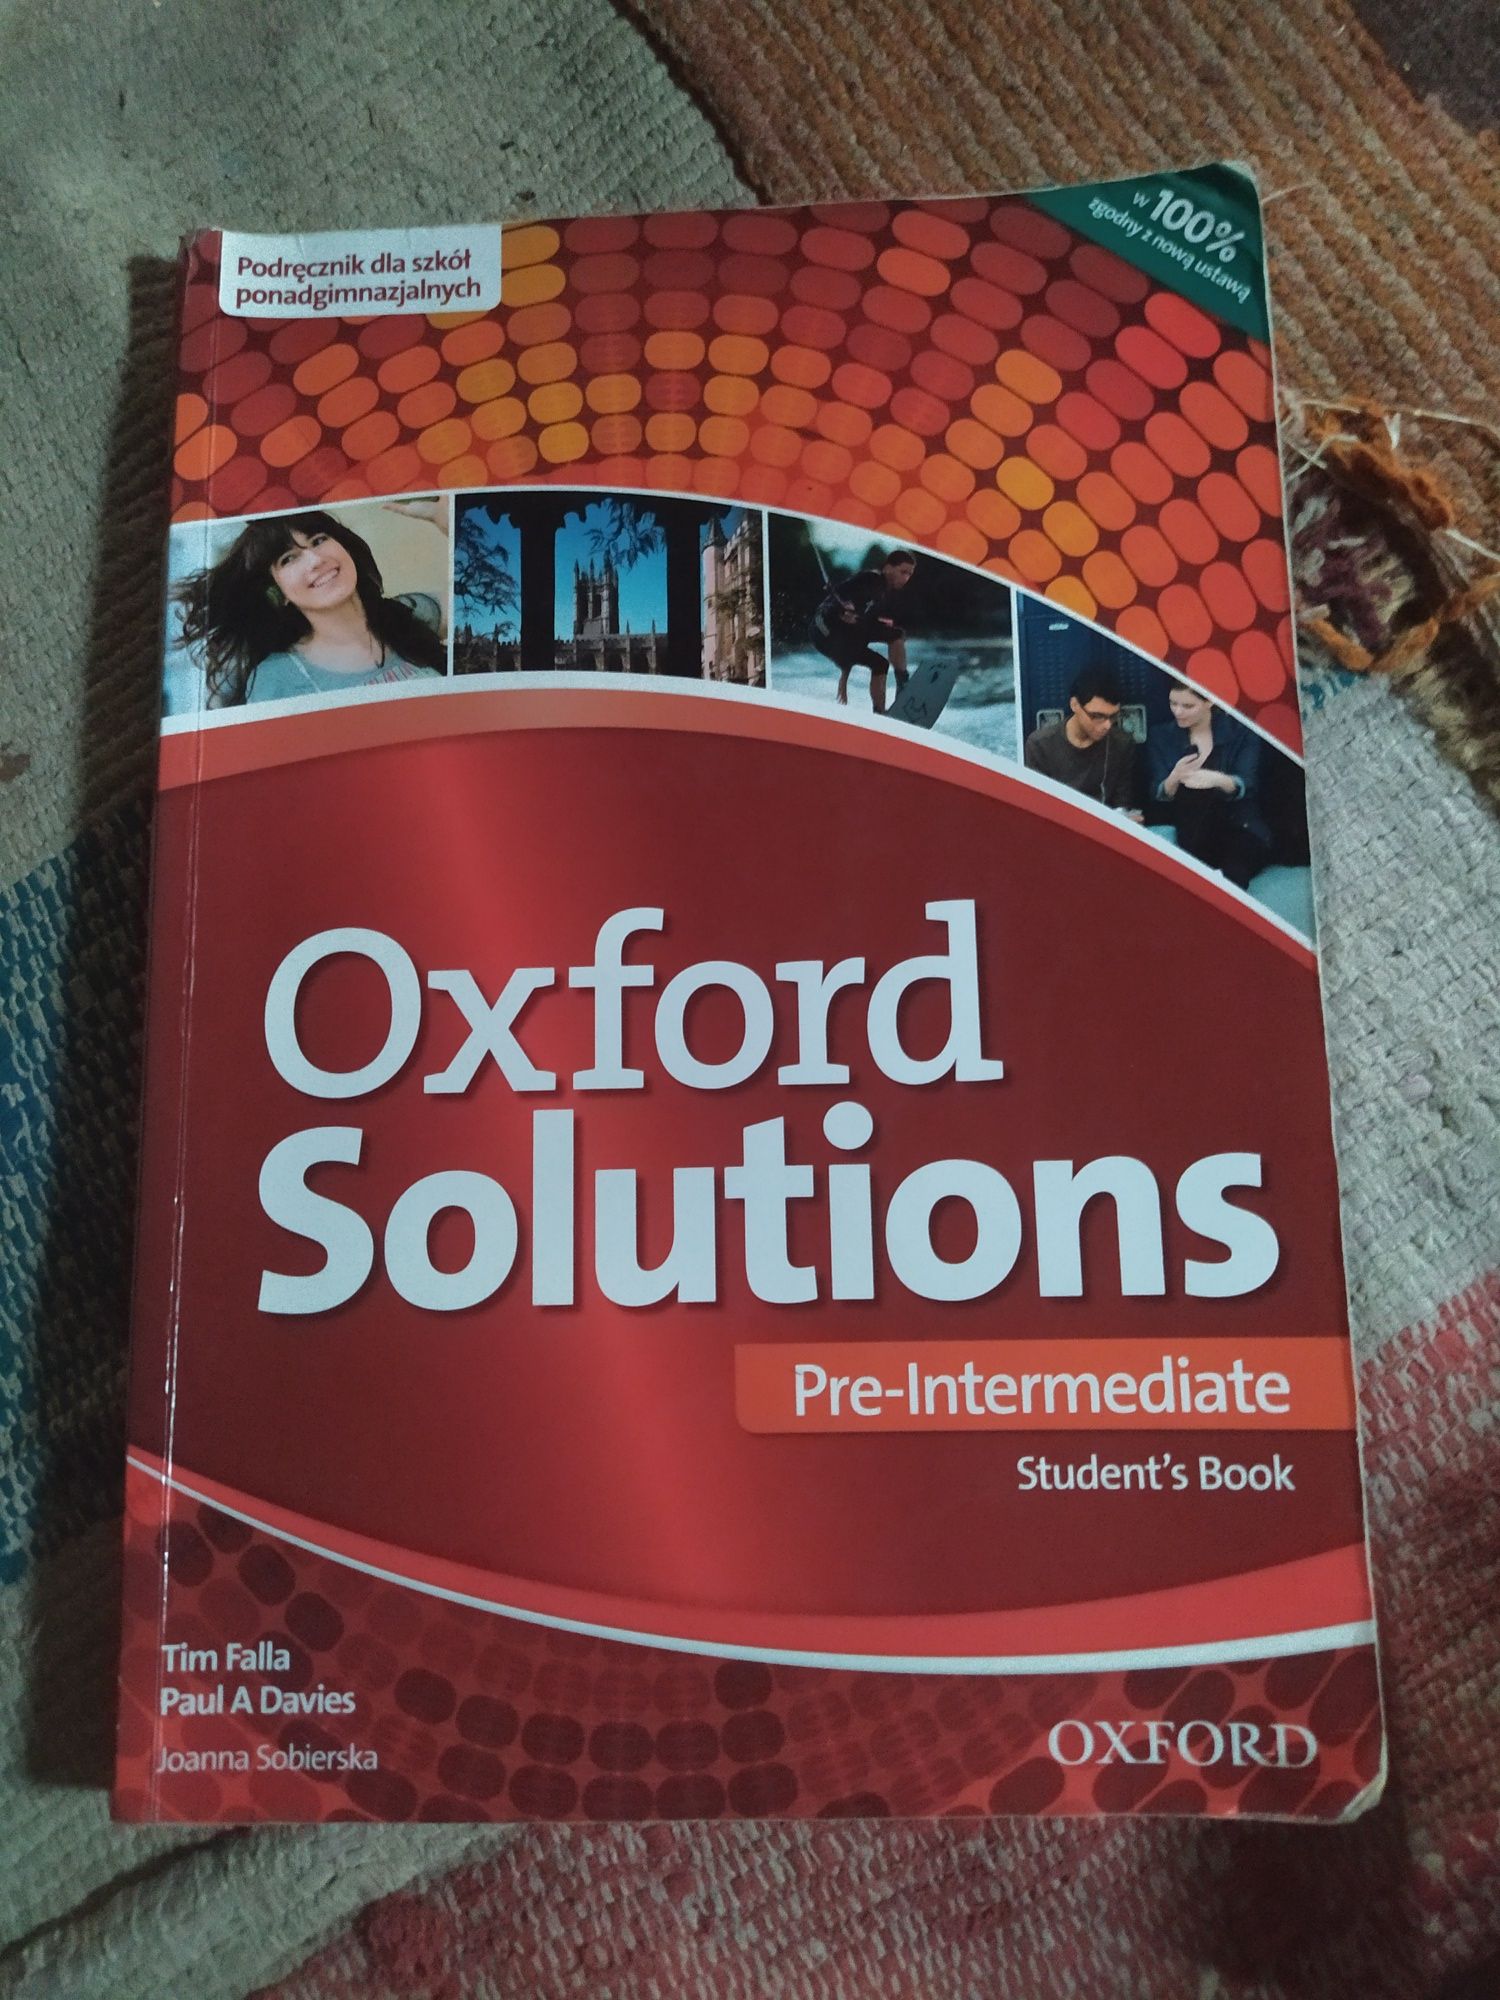 Podręcznik J.angielski "Oxford Solutions Pre-Intermediate"